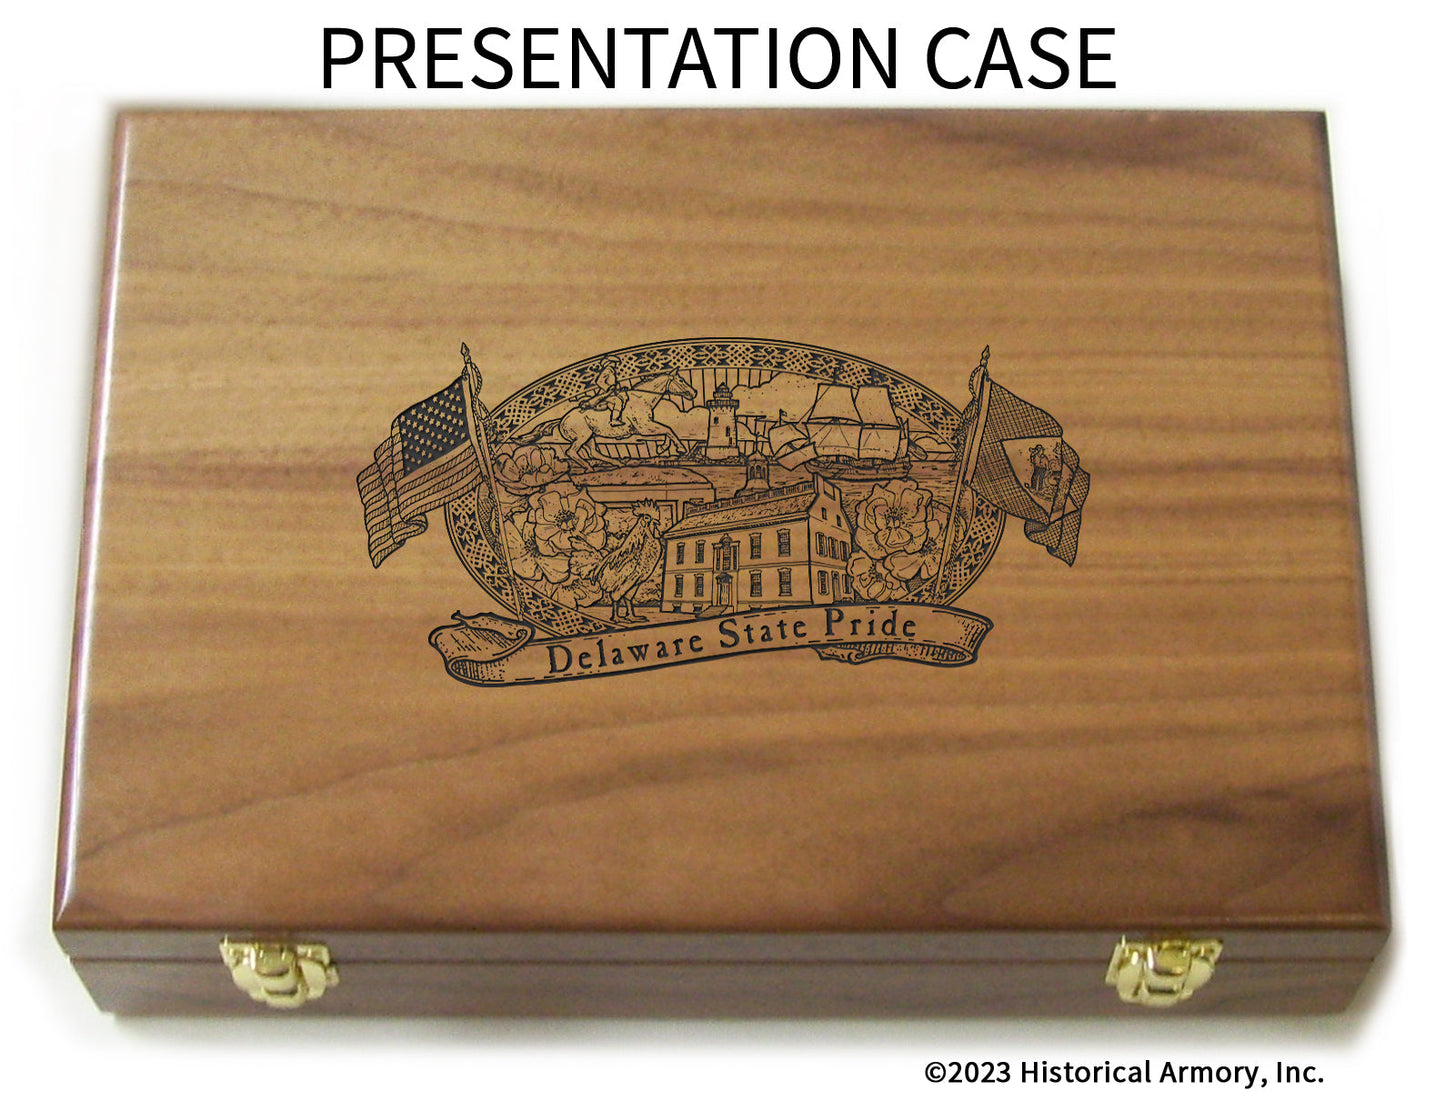 Delaware State Pride Limited Edition Engraved 1911 Presentation Case